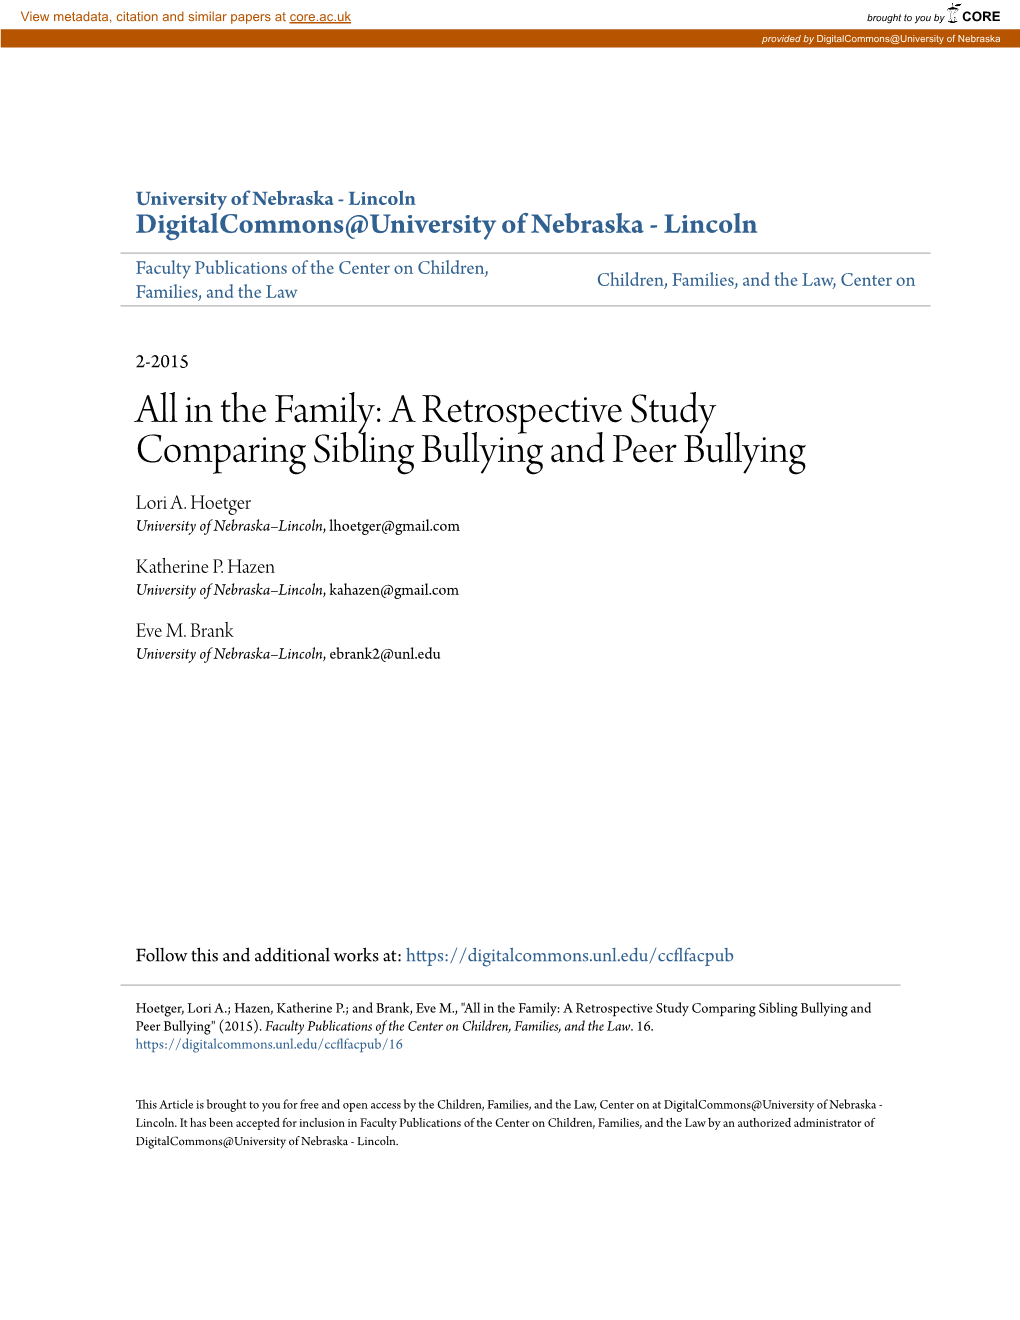 A Retrospective Study Comparing Sibling Bullying and Peer Bullying Lori A